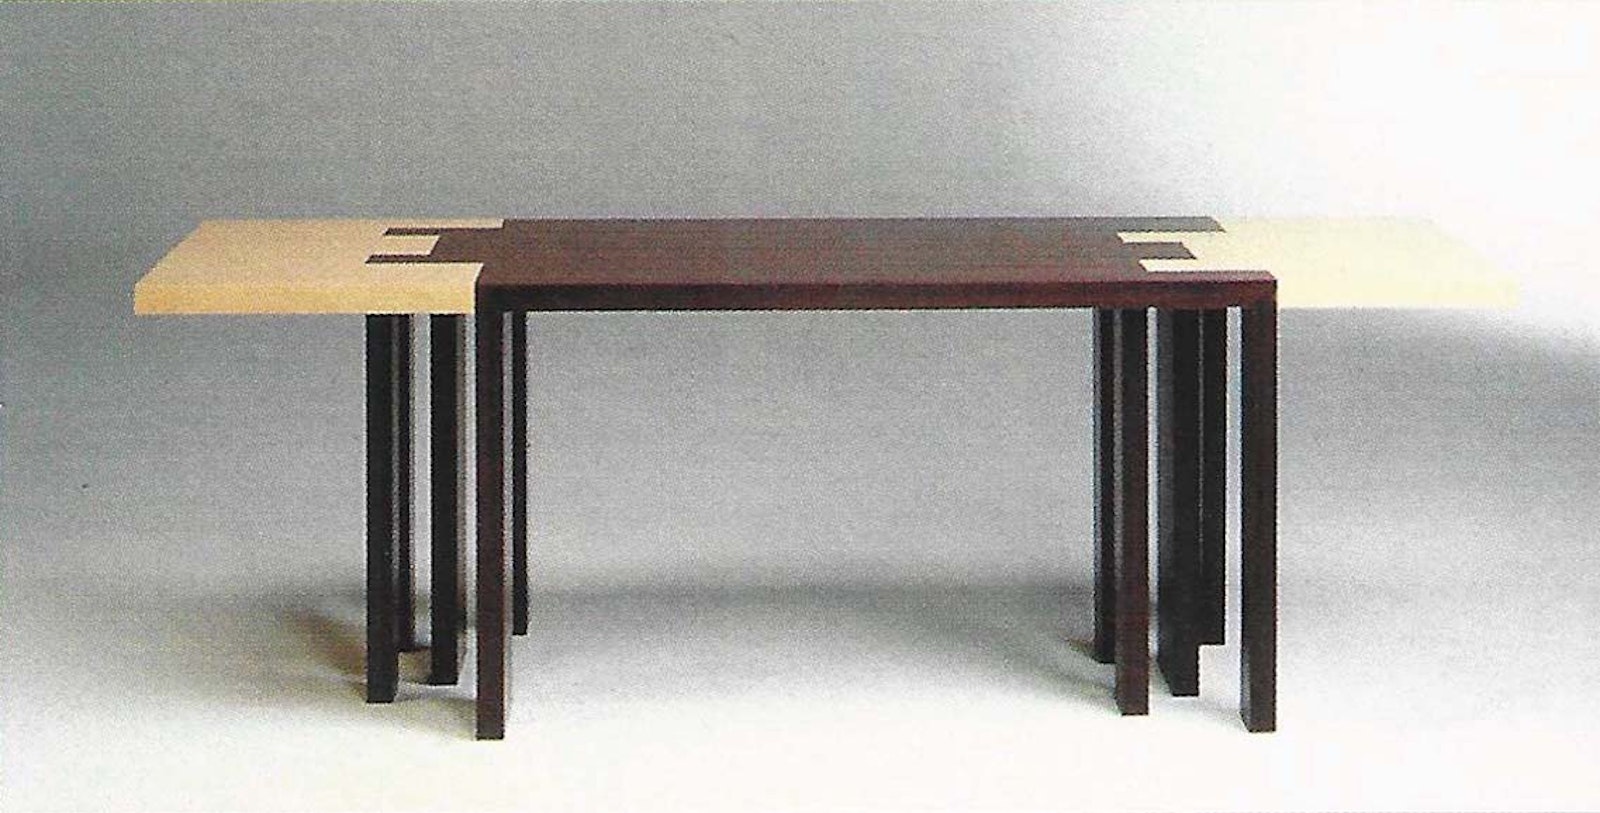 Homenaje a Eduardo Chillida; dining-, working- or conference table (1994) © Studio ESHOF